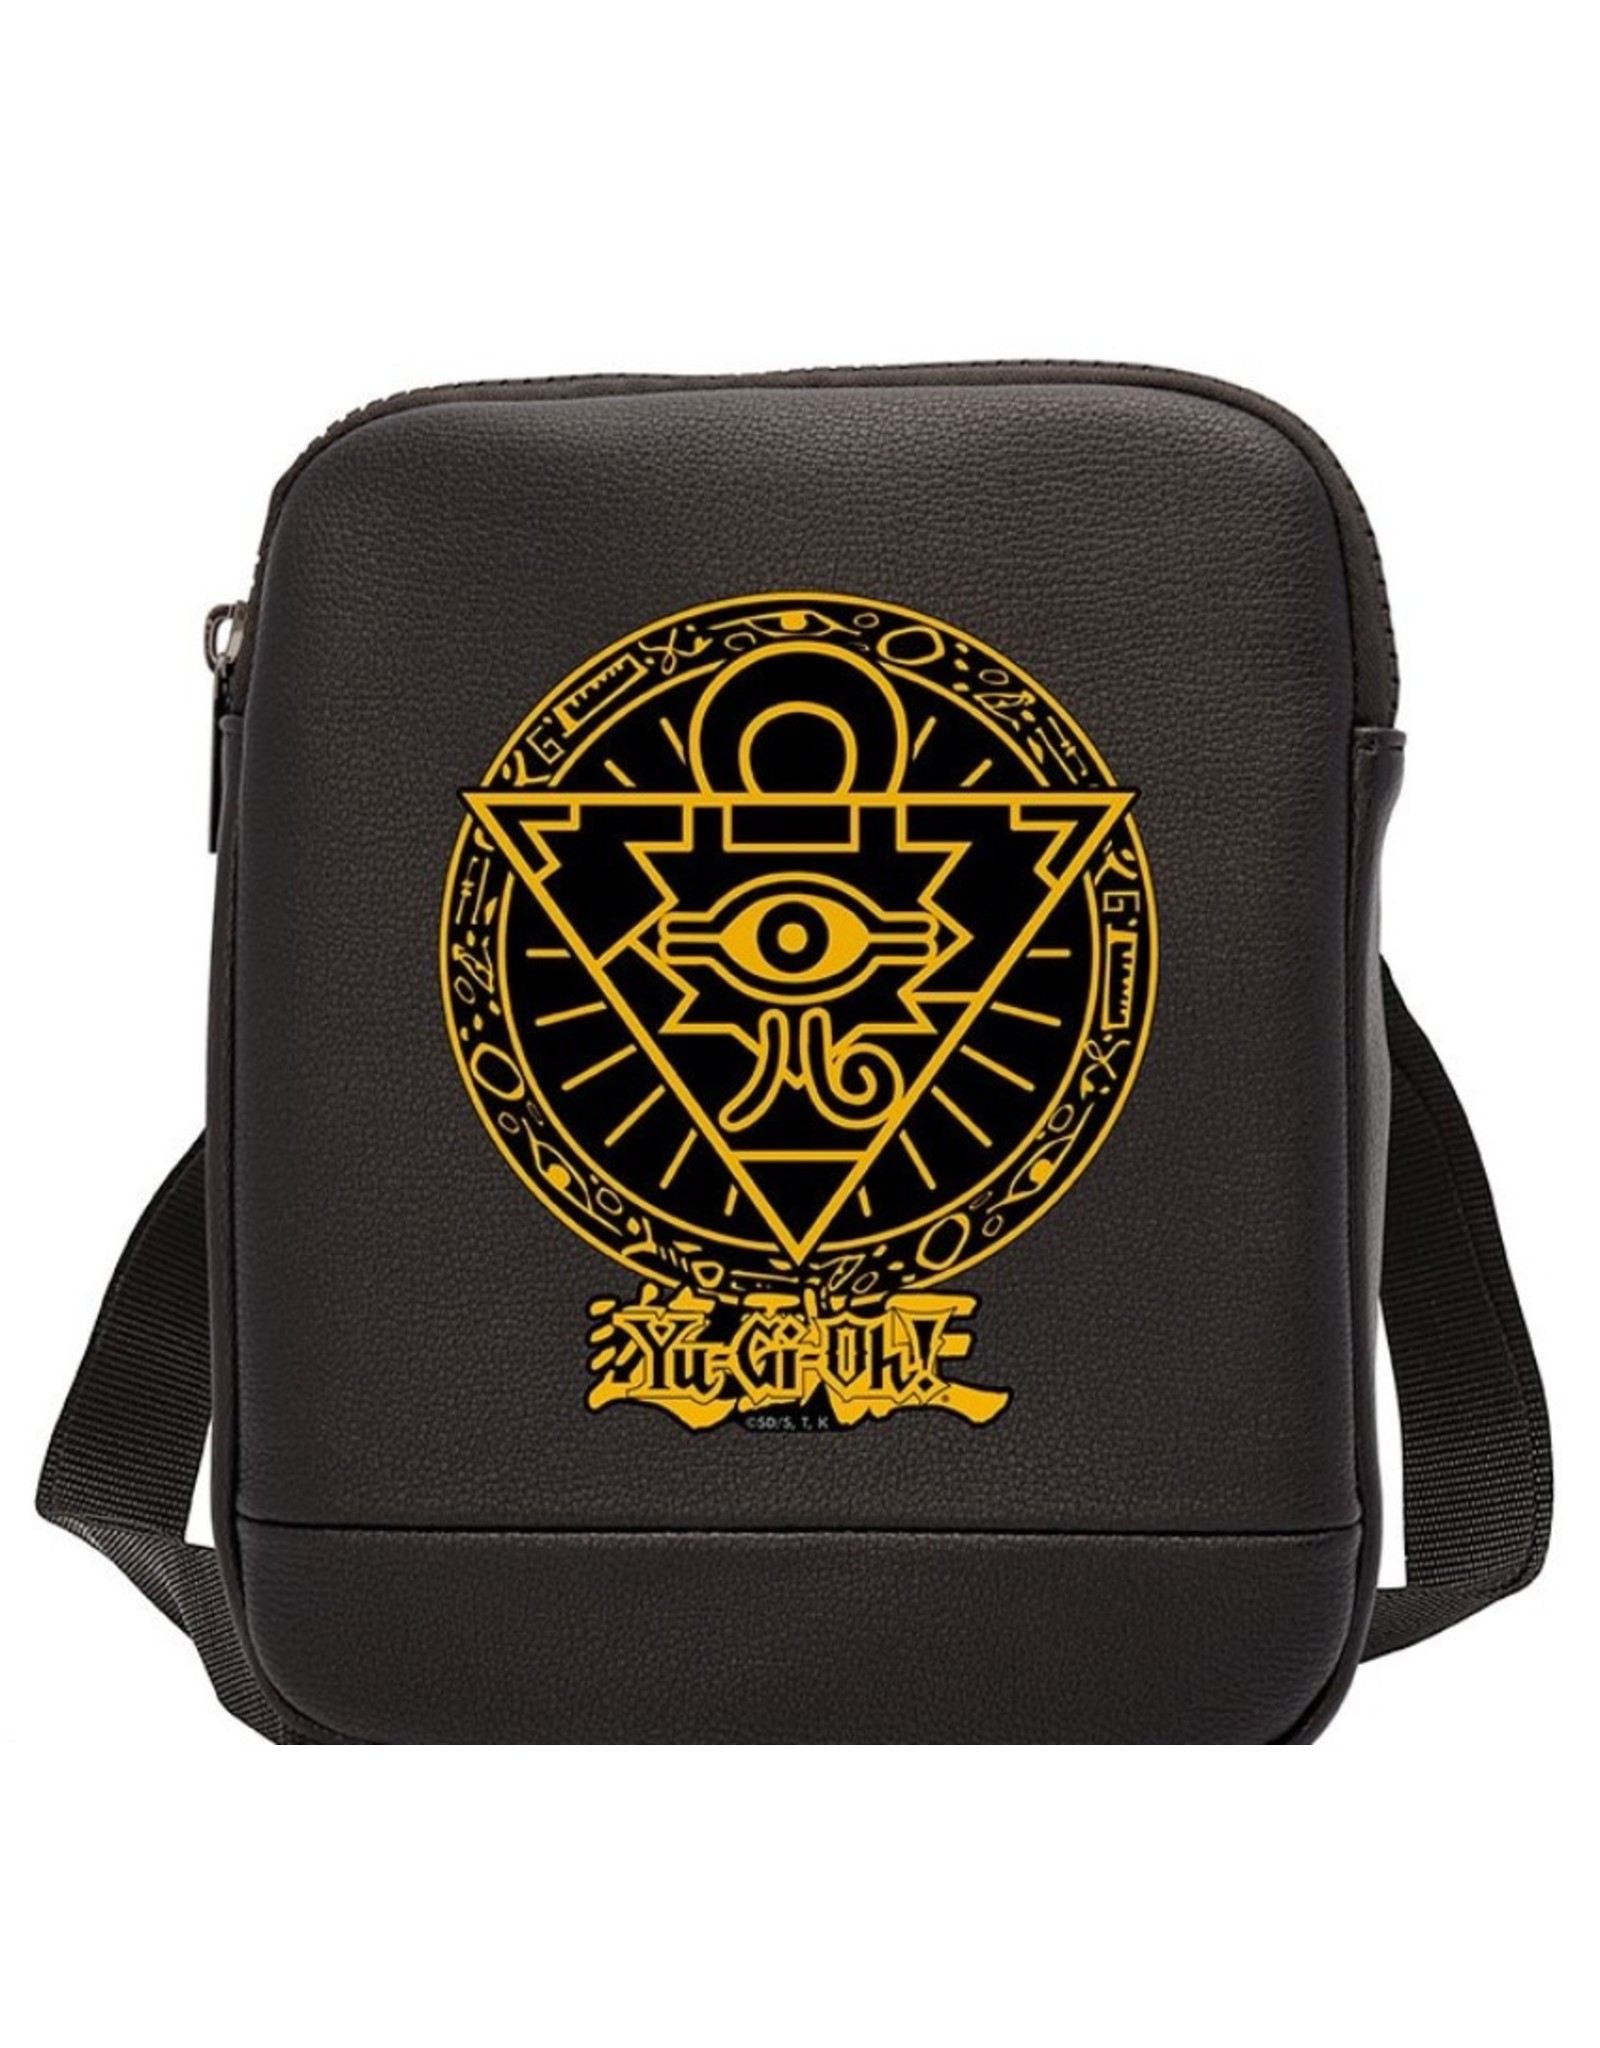 One Piece Merchandise bags - YU-GI-OH! Millennium  Messenger Bag  small